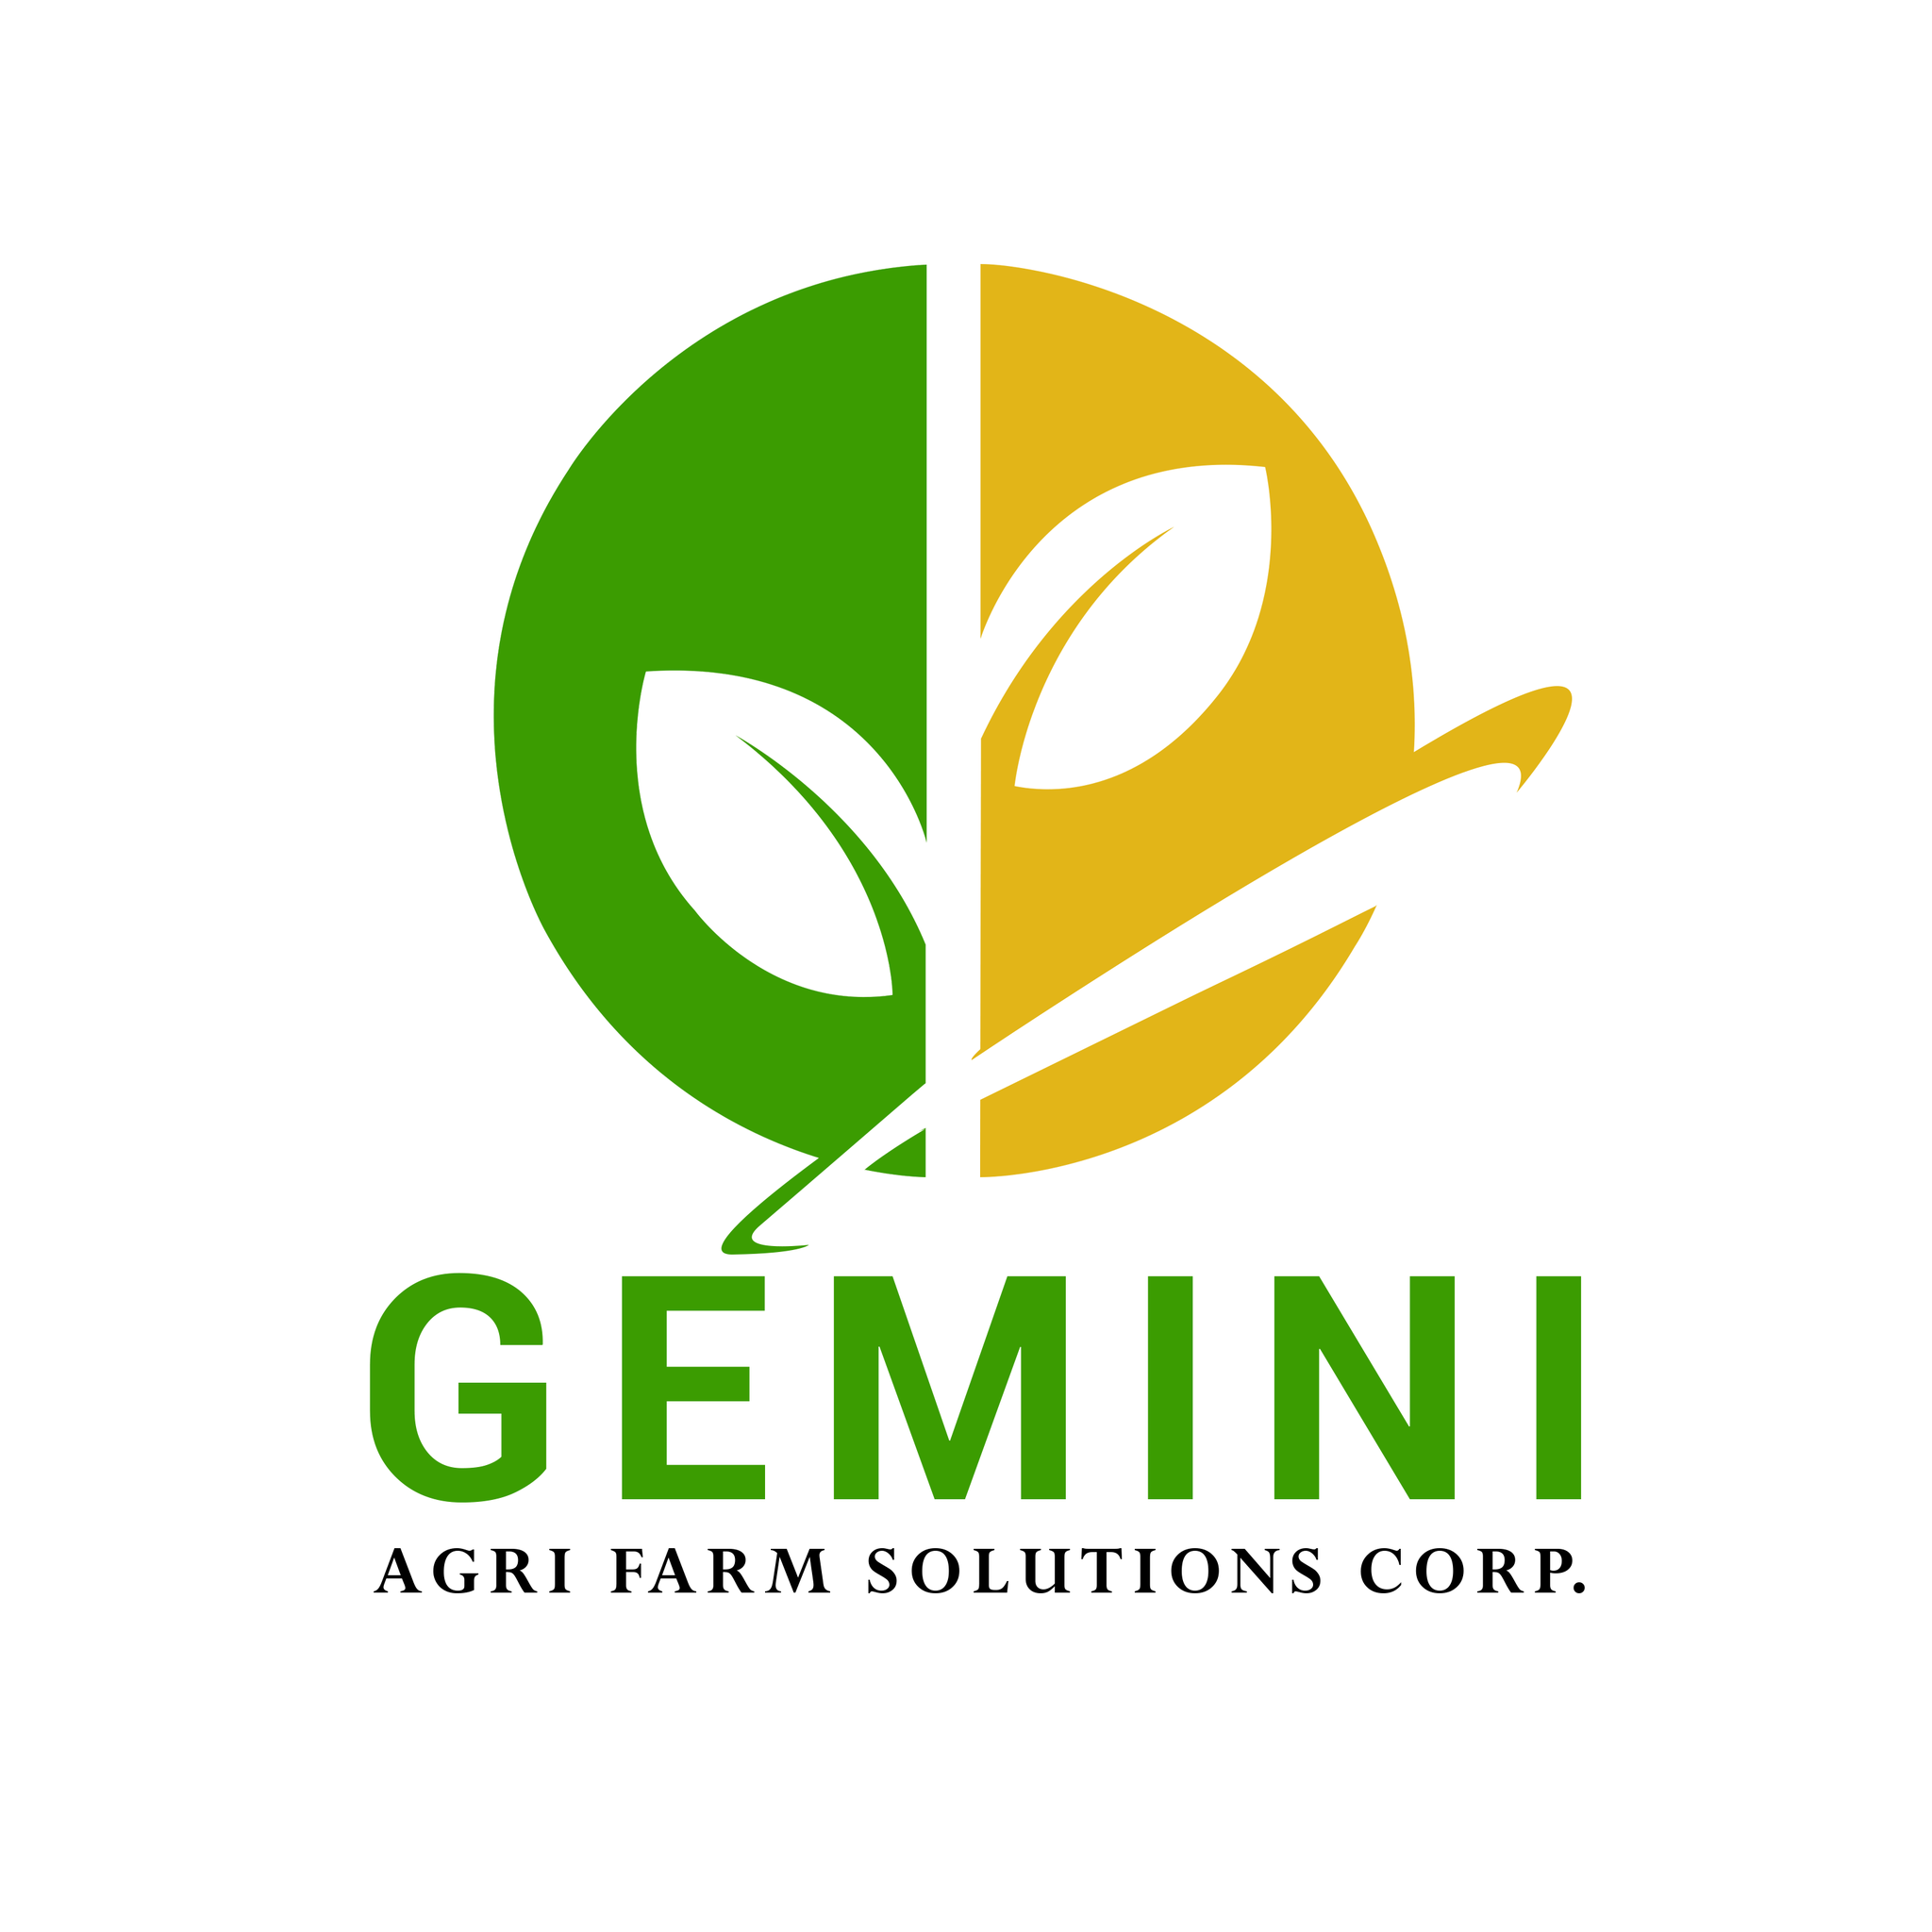 Gemini Agri Farm Solutions Corp.